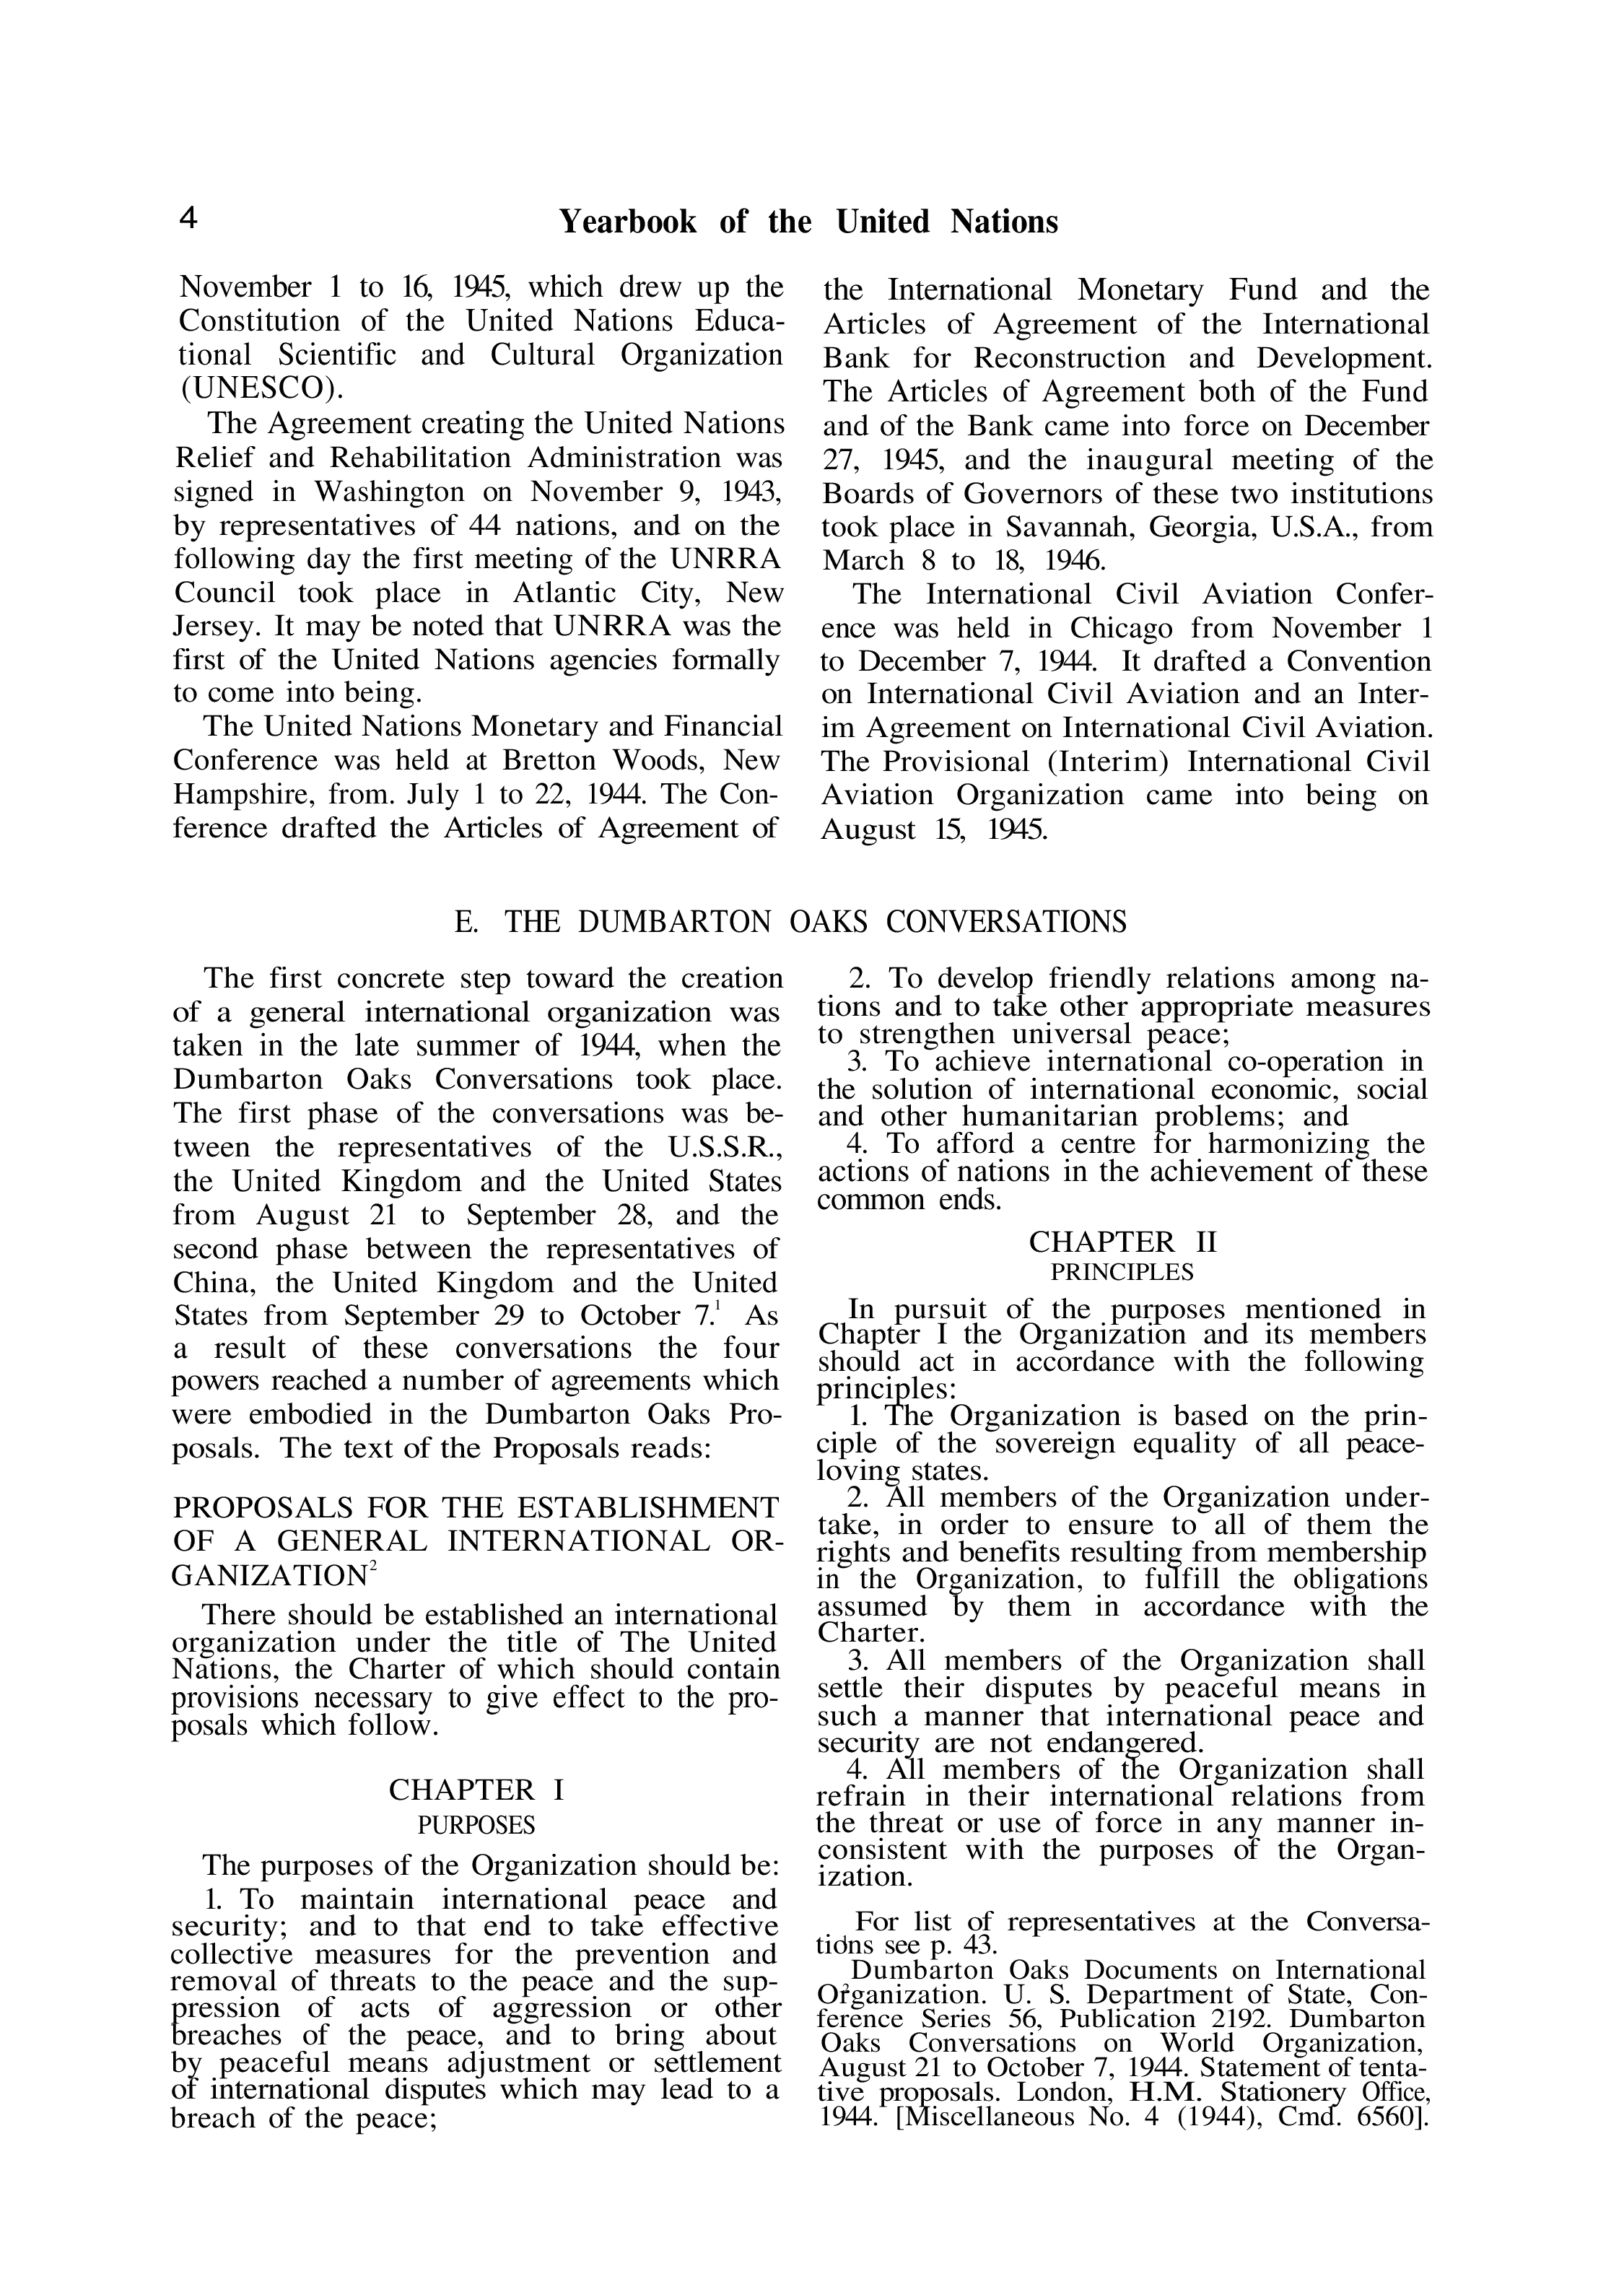 YUN Volume_Page 1946-47_39